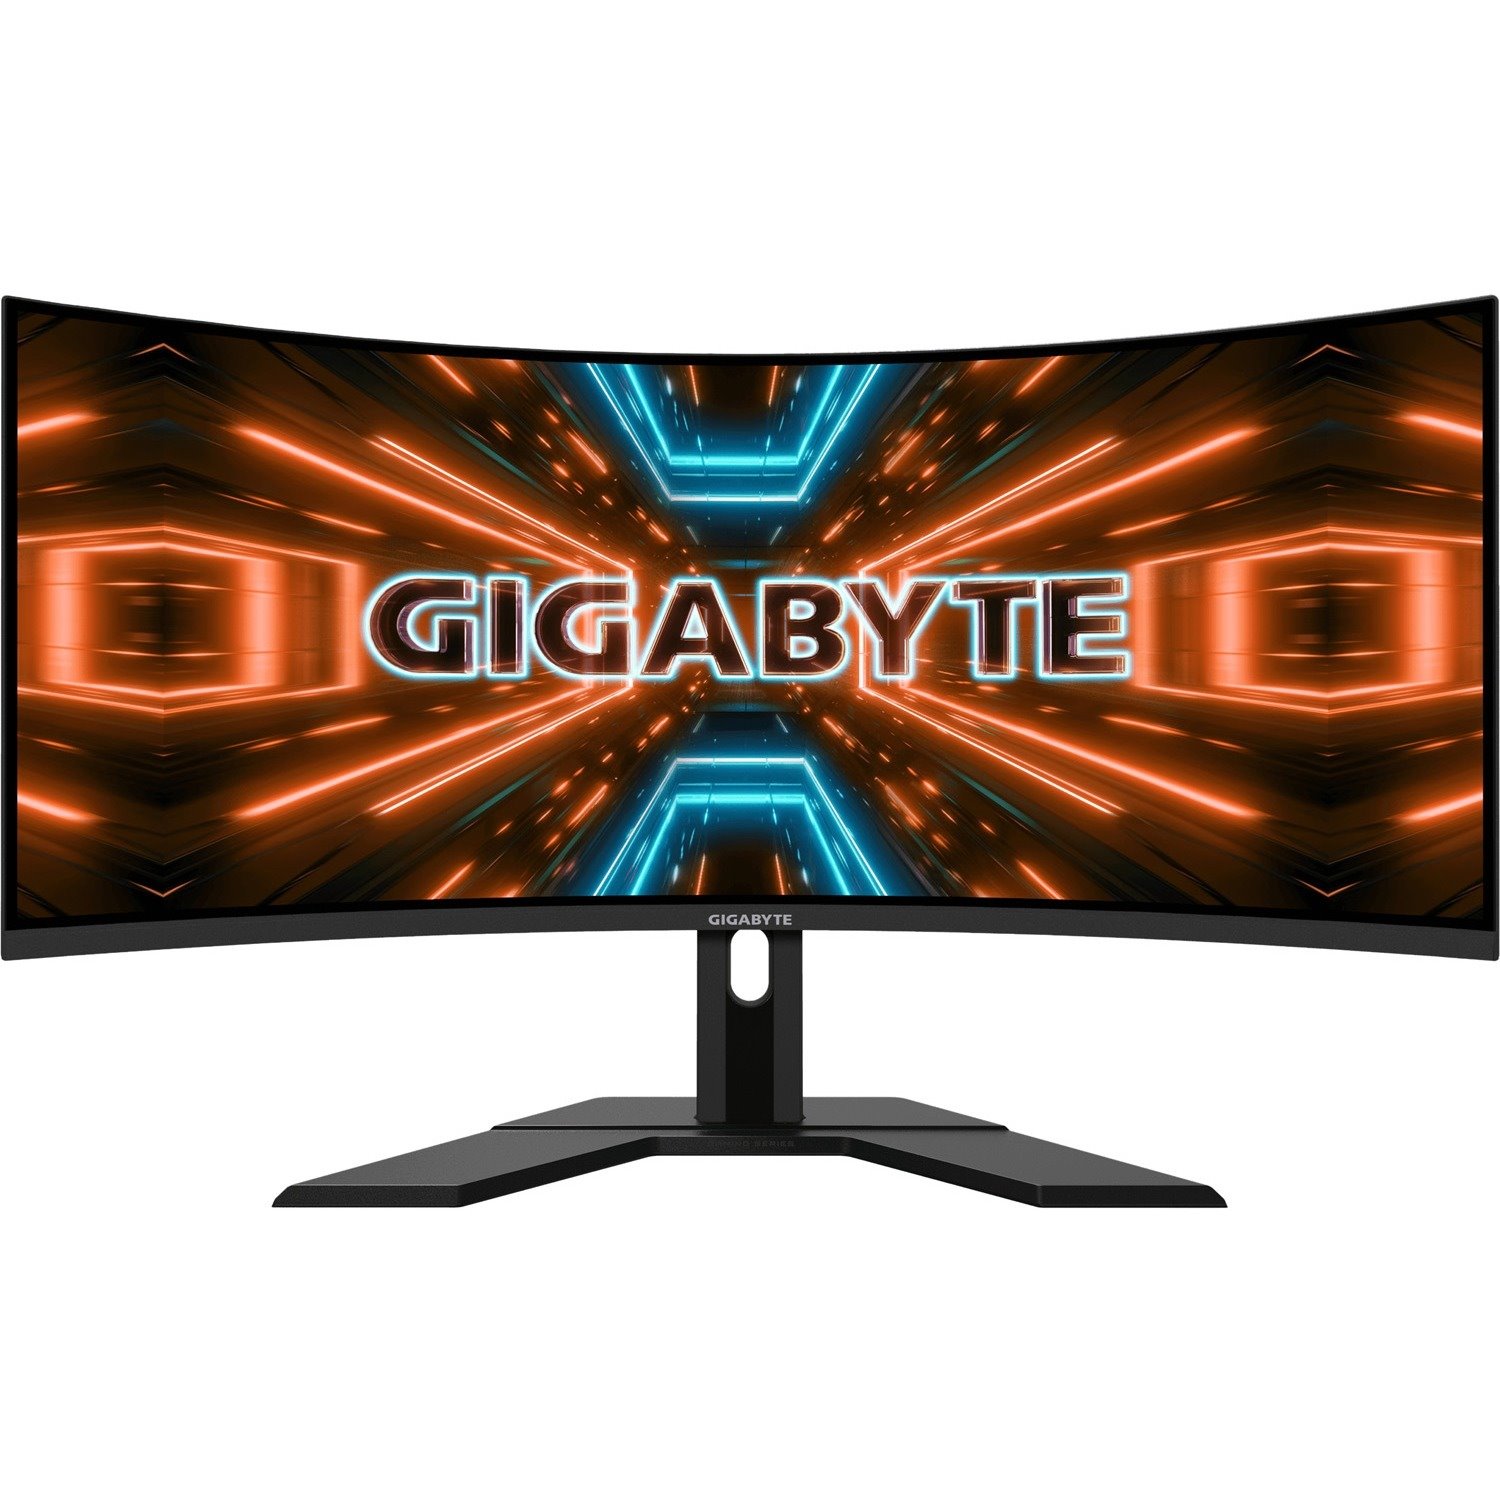 Gigabyte G34WQC A 34" WQHD Edge LED Gaming LCD Monitor - 16:9